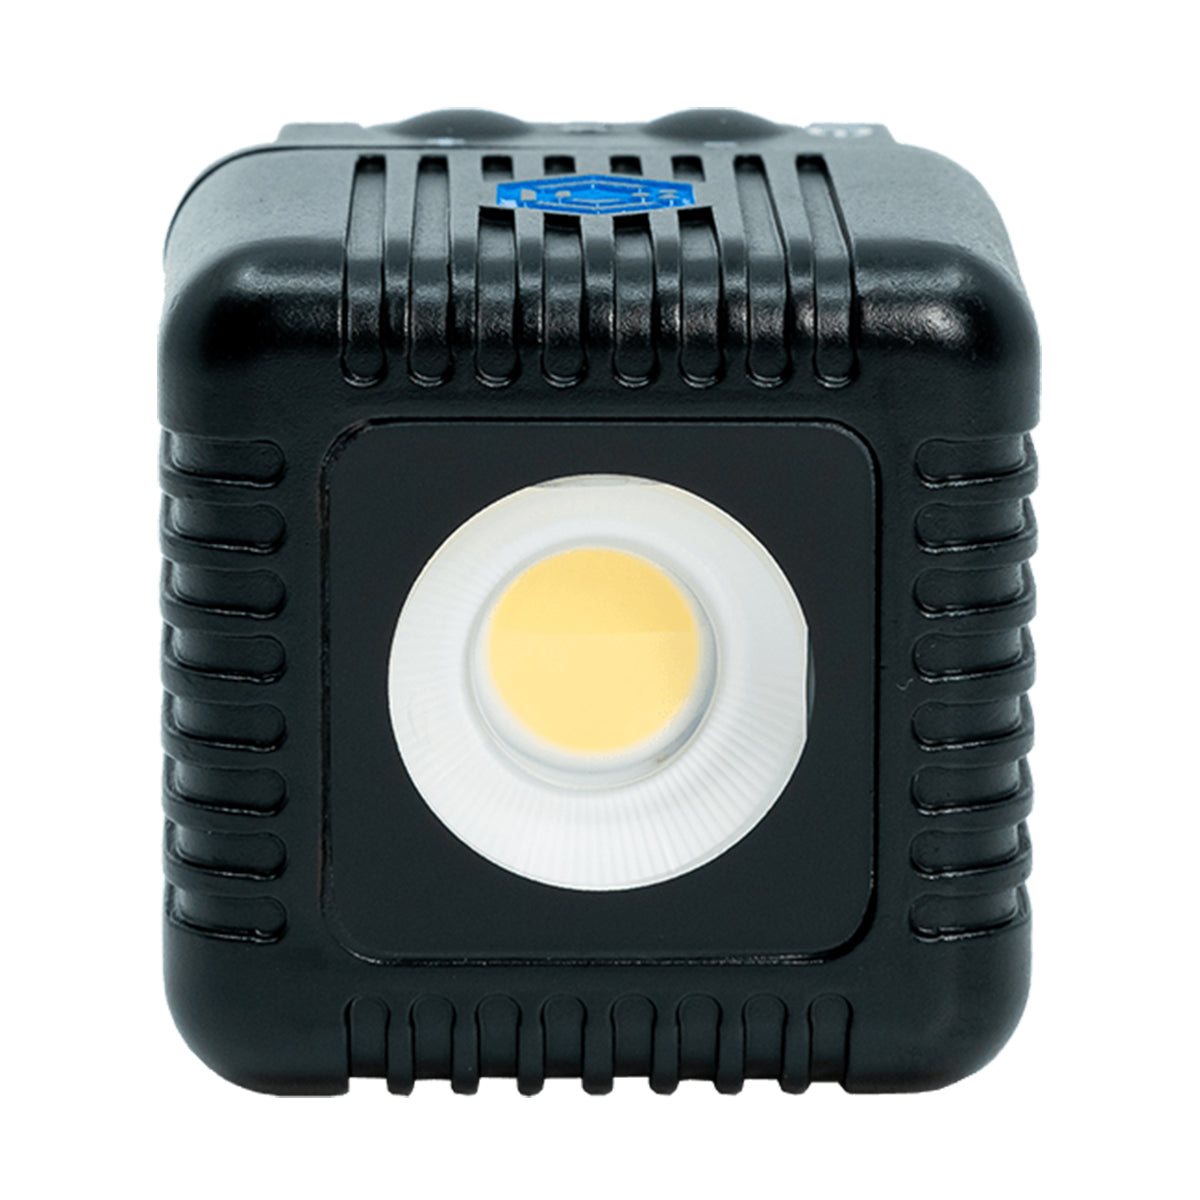 Lume Cube 2.0 LED Light